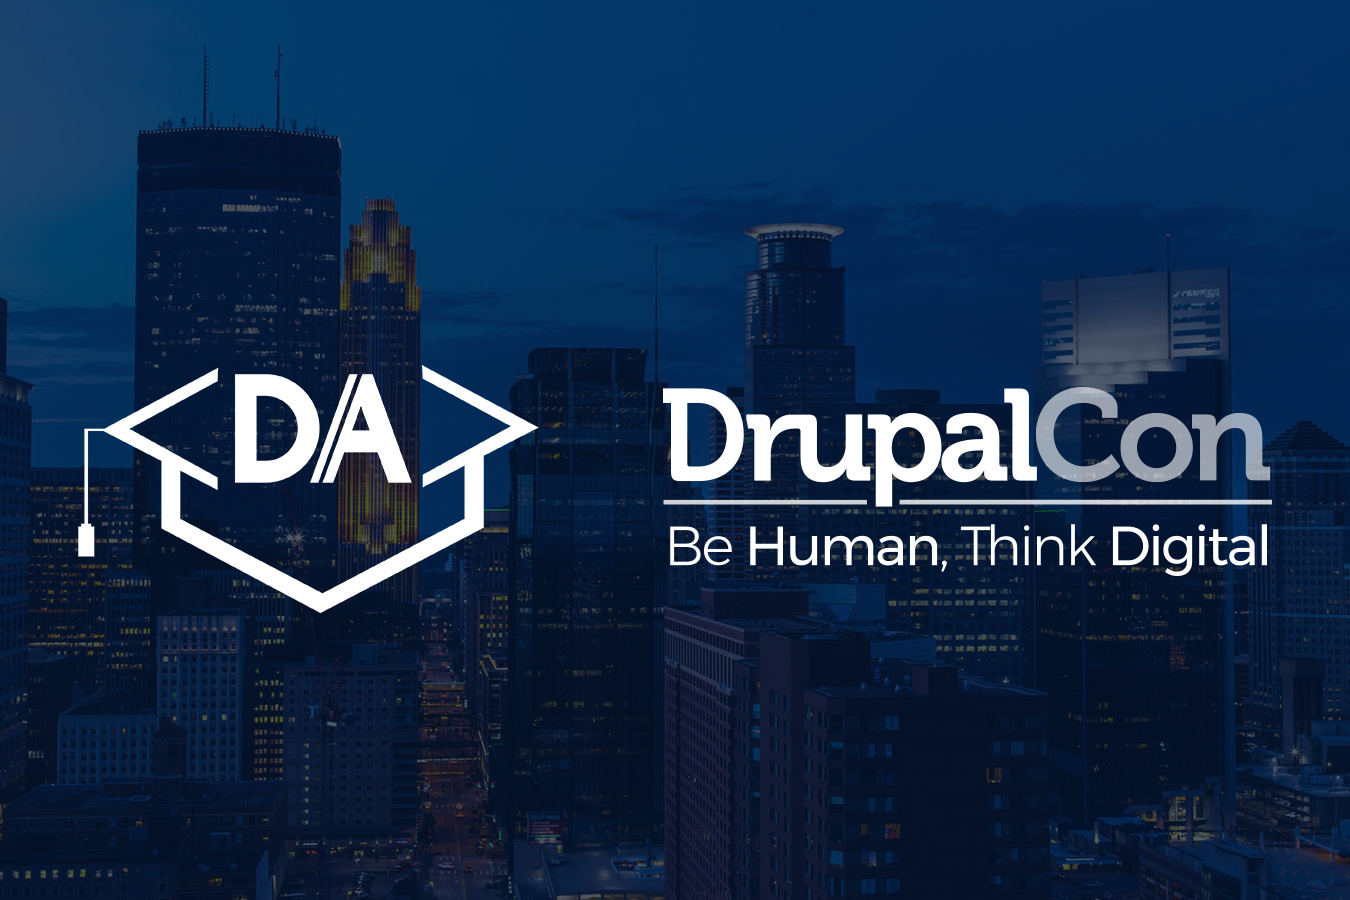 Debug Academy and DrupalCon logo overlooking Minneapolis Minnesota skyline